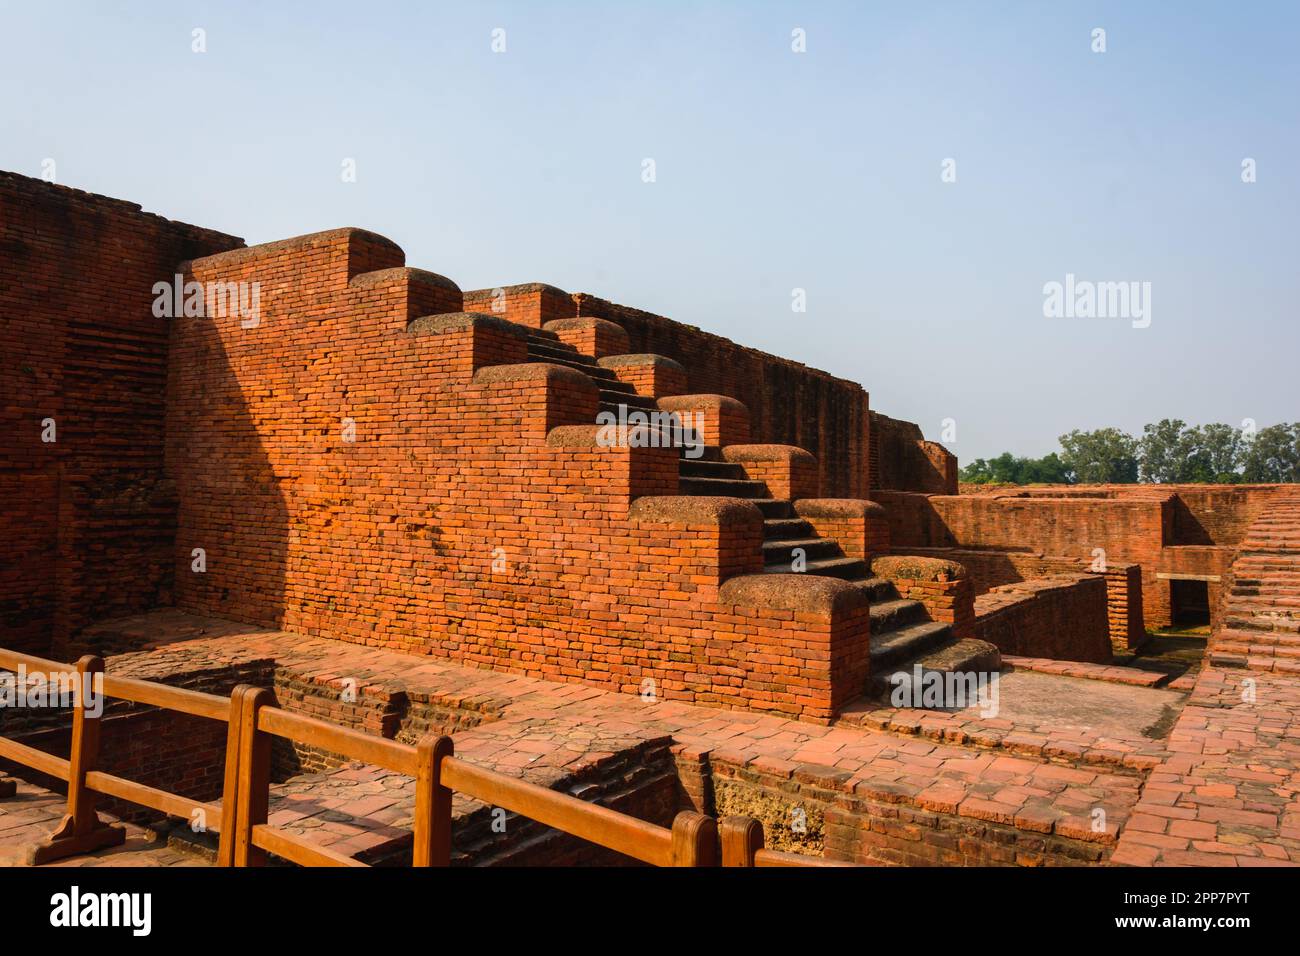 Nalanda | Ancient Nalanda University | Ruins of Nalanda, India Stock Photo